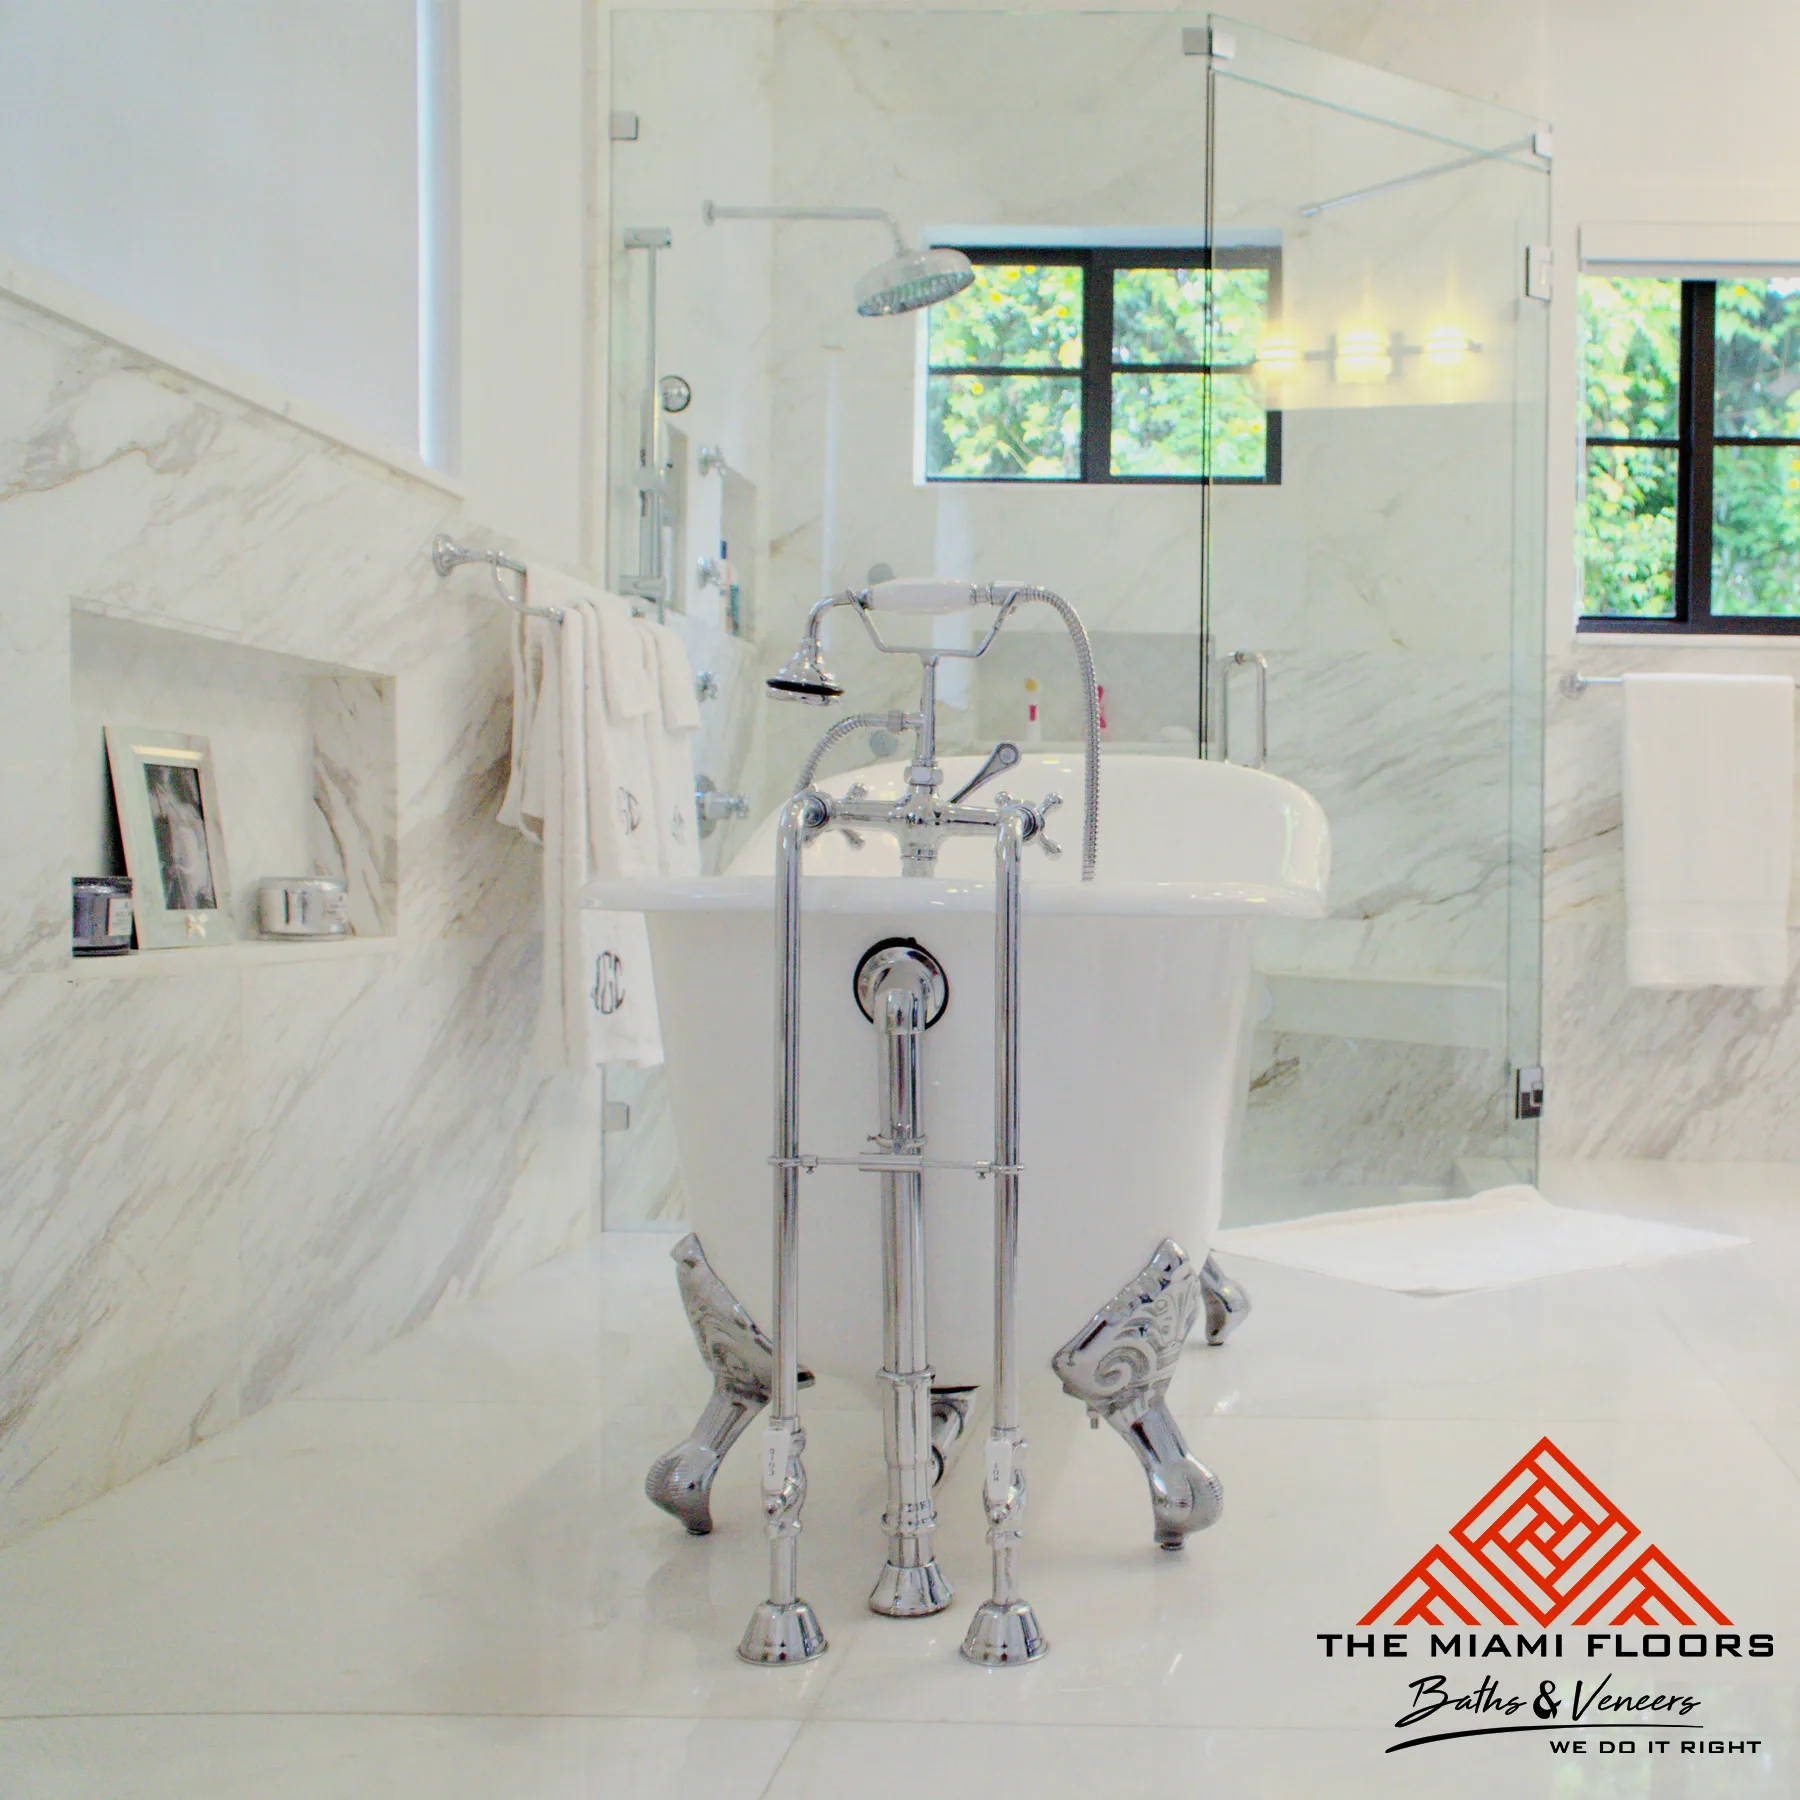 The Miami Floors - Bath & Veneers - Bathroom Tile Installation Services in miami